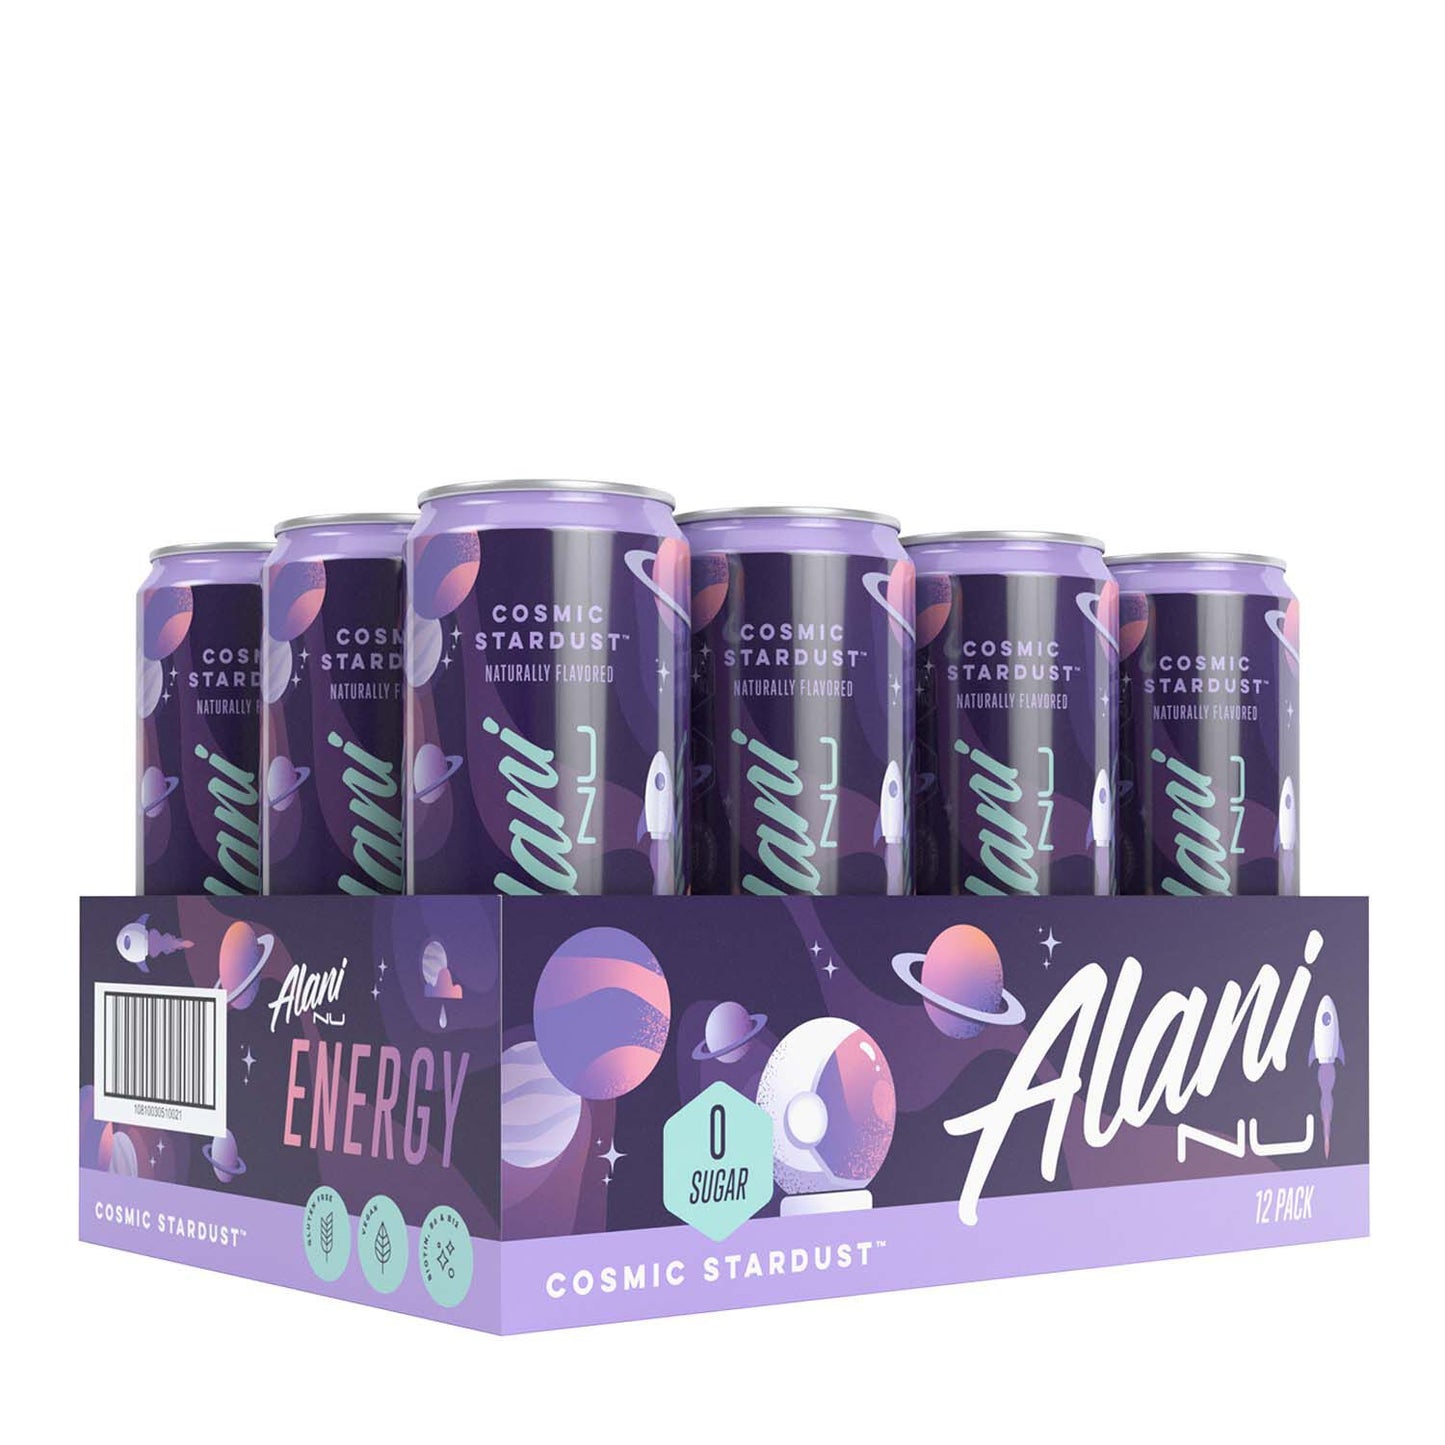 Energy Drink- Cosmic Stardust (12 Drinks, 12 Fl. Oz. Each)